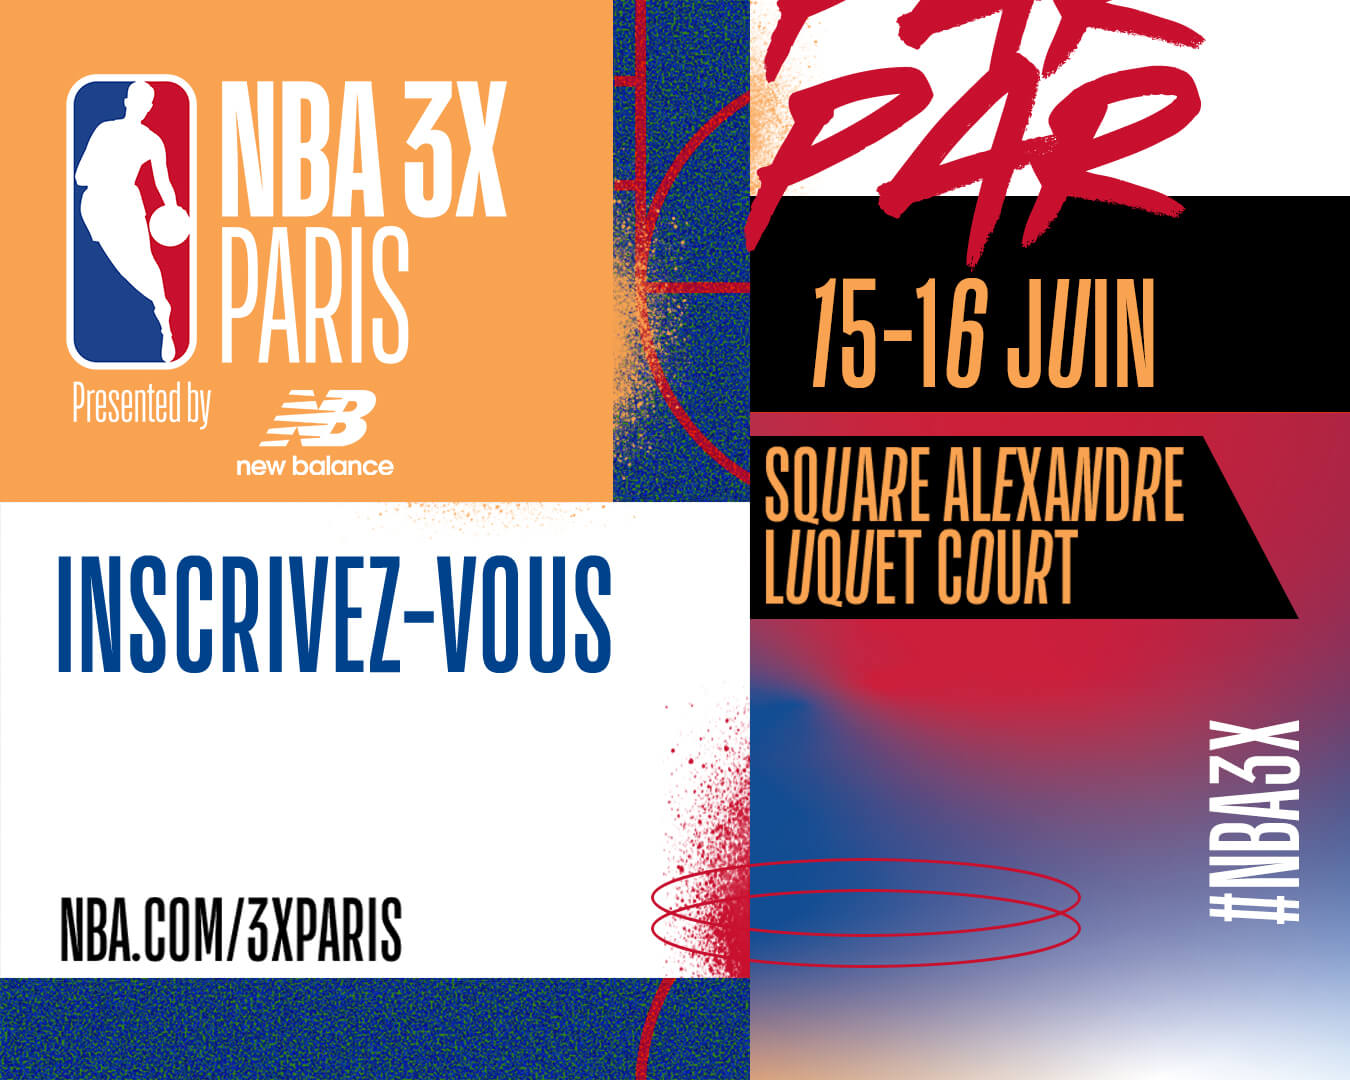 NBA 3X_Registration_PARIS_4x3